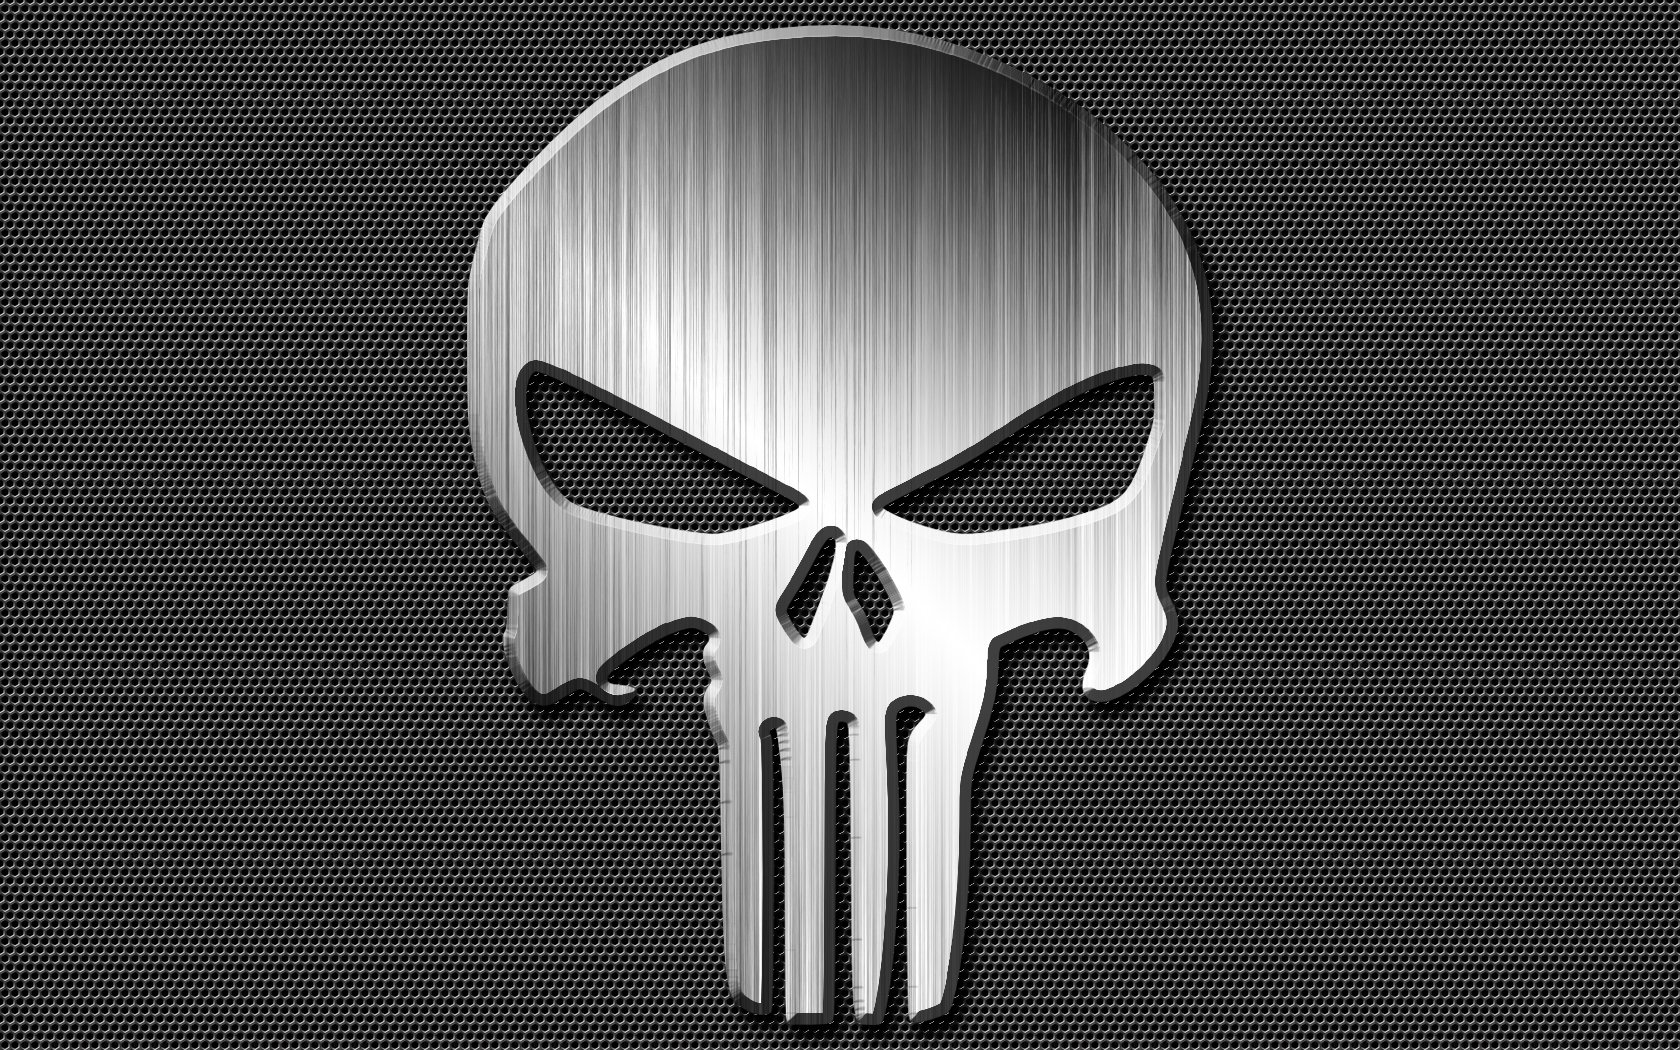 Punisher Skull by markAscott on